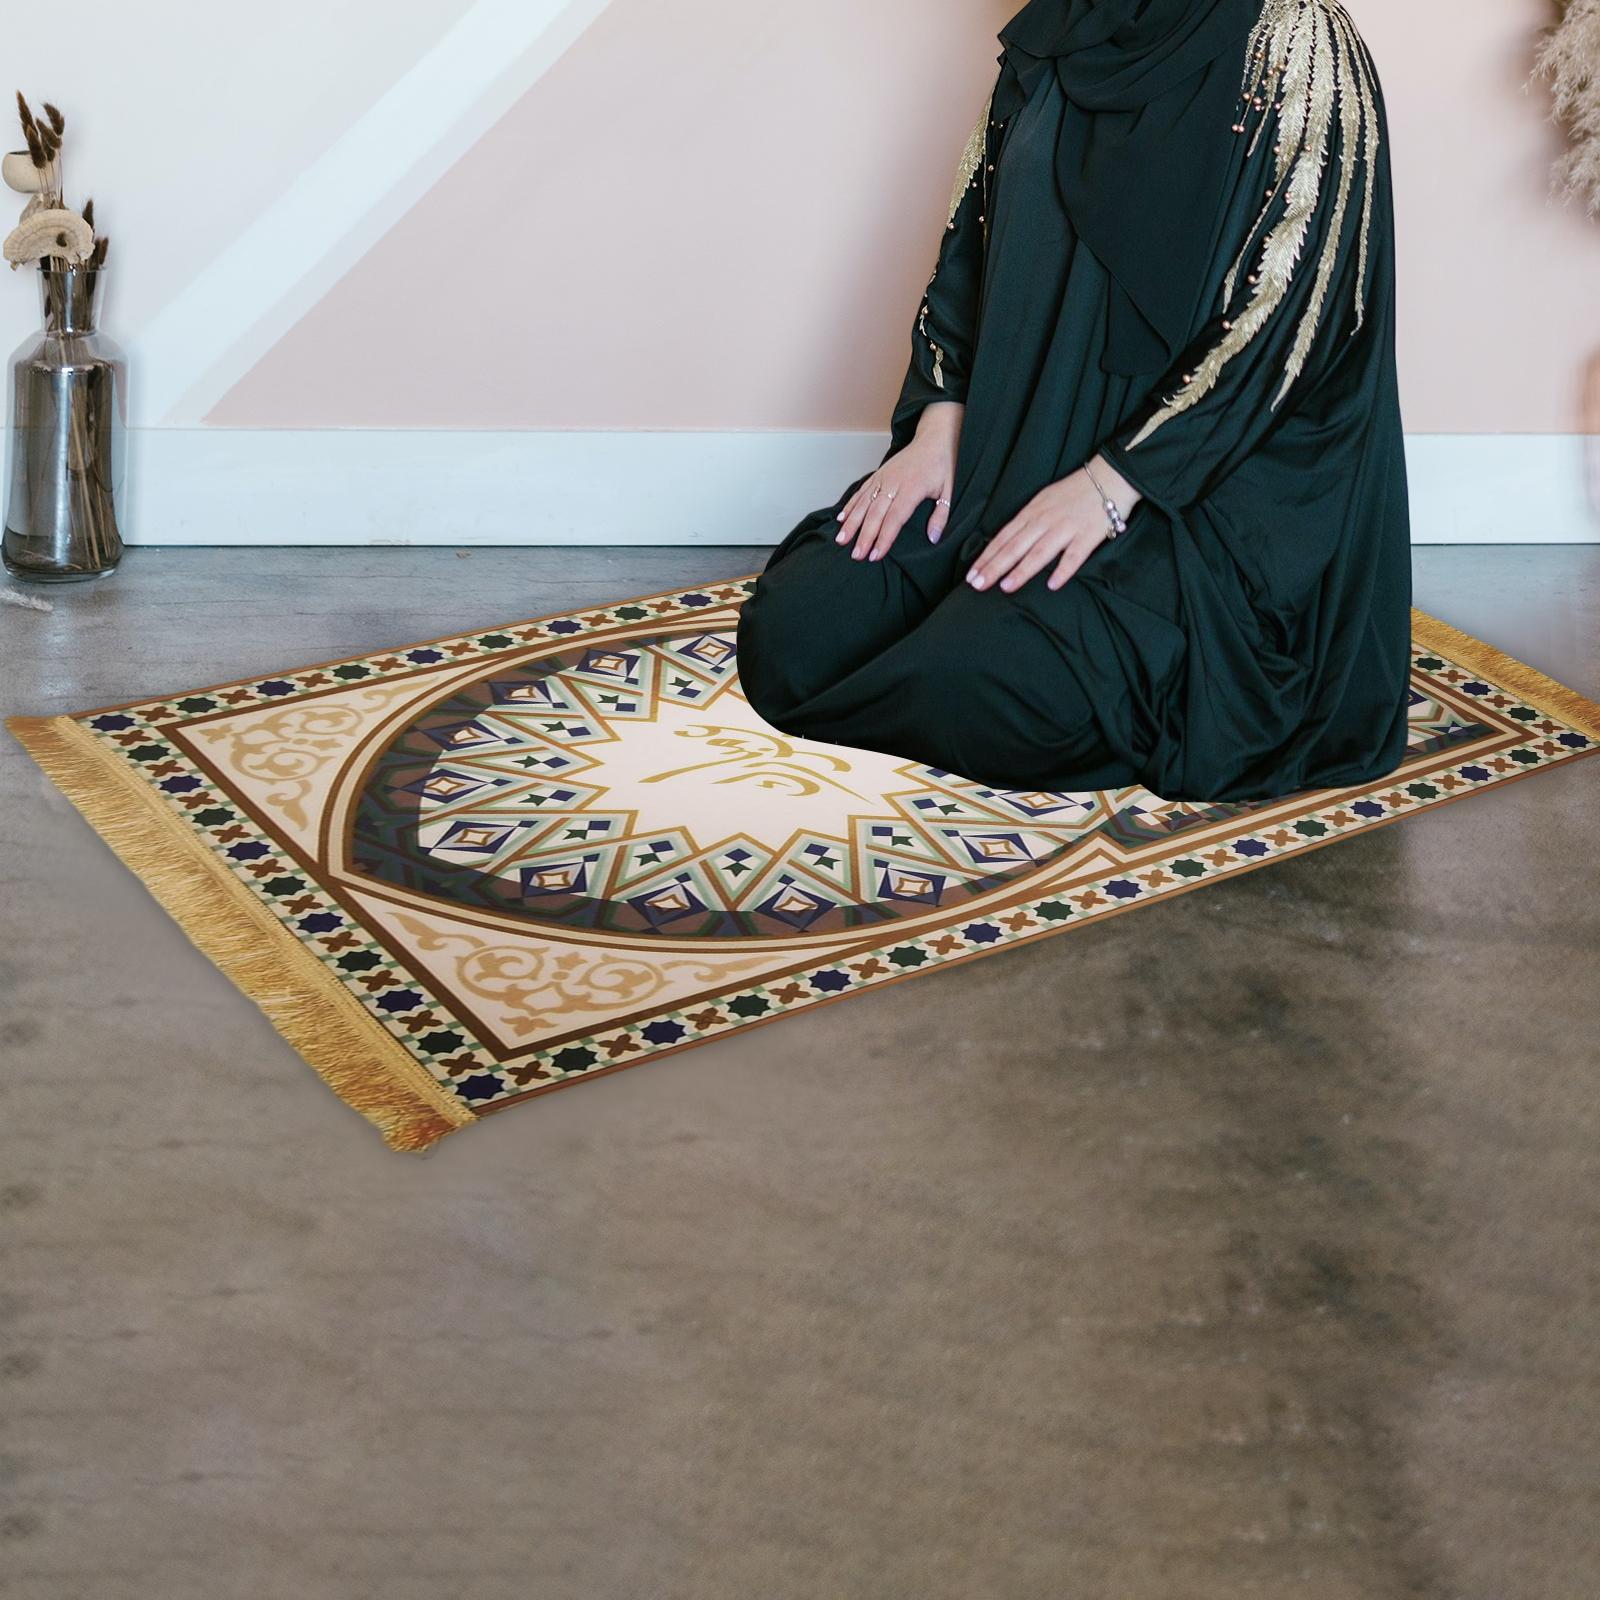 Eid Praying Rug Soft for Knees and Forehead Prayer Rug Carpet 70cmx110cm Style A